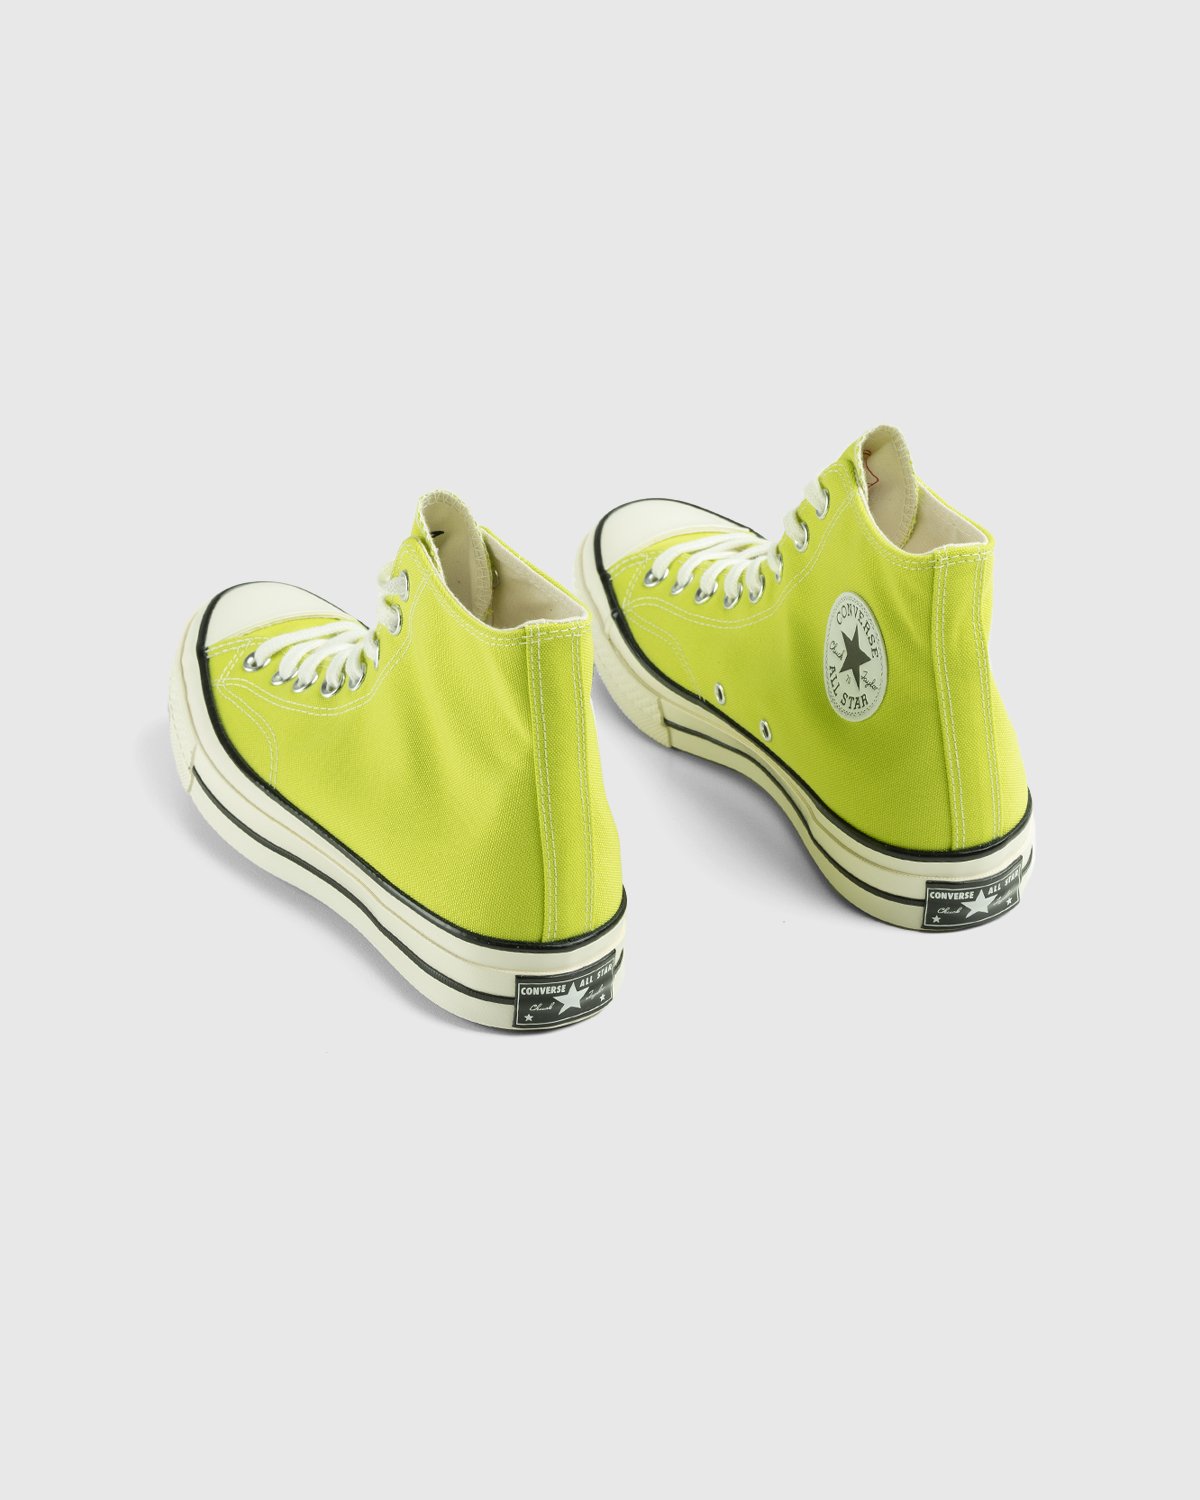 Converse - Chuck 70 Lime Twist Egret Black - Footwear - Yellow - Image 4